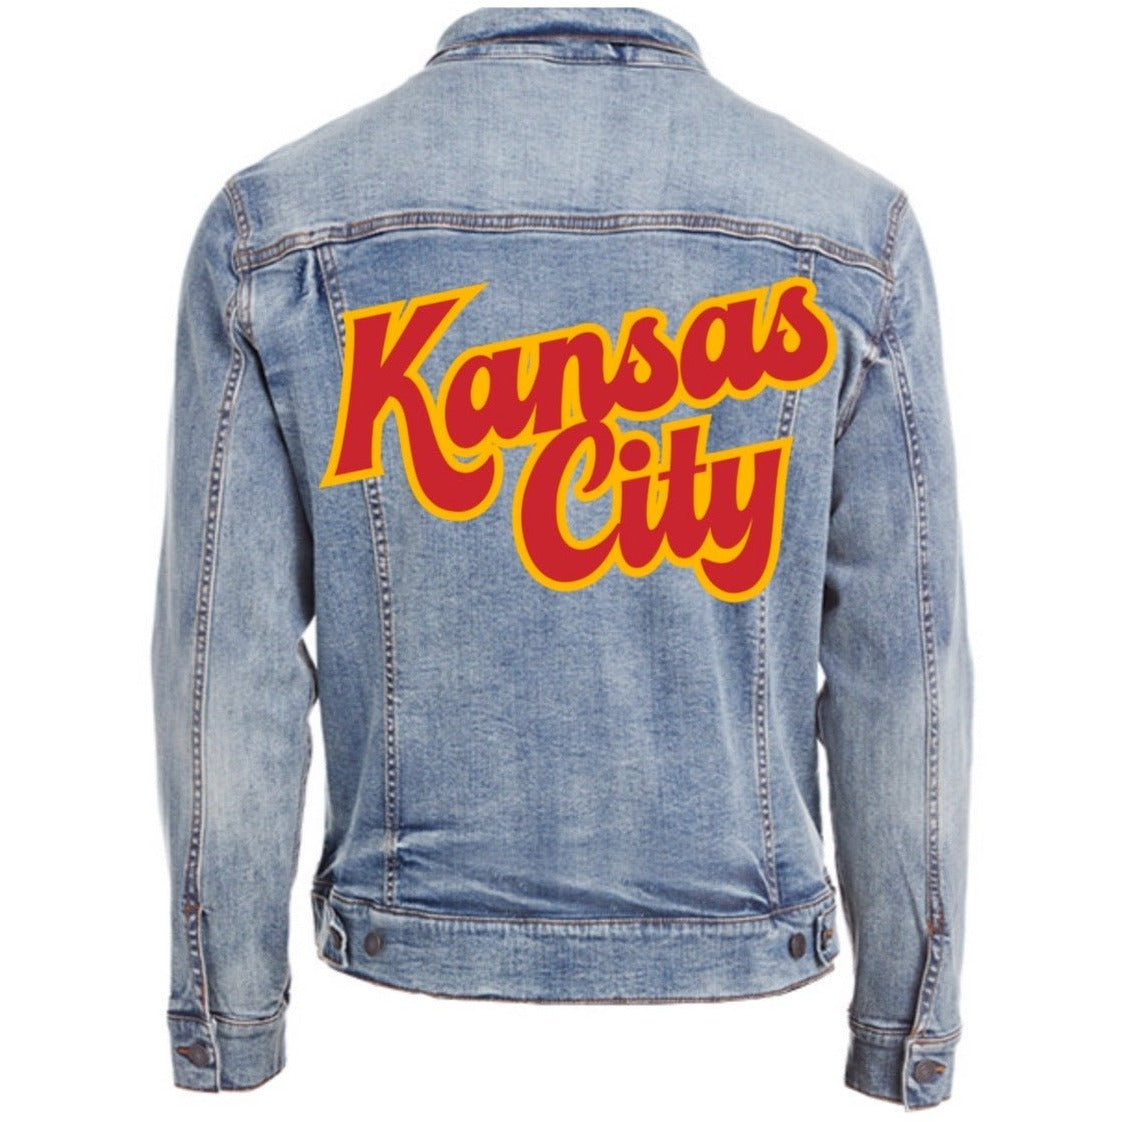 Kansas City Script Denim Jacket